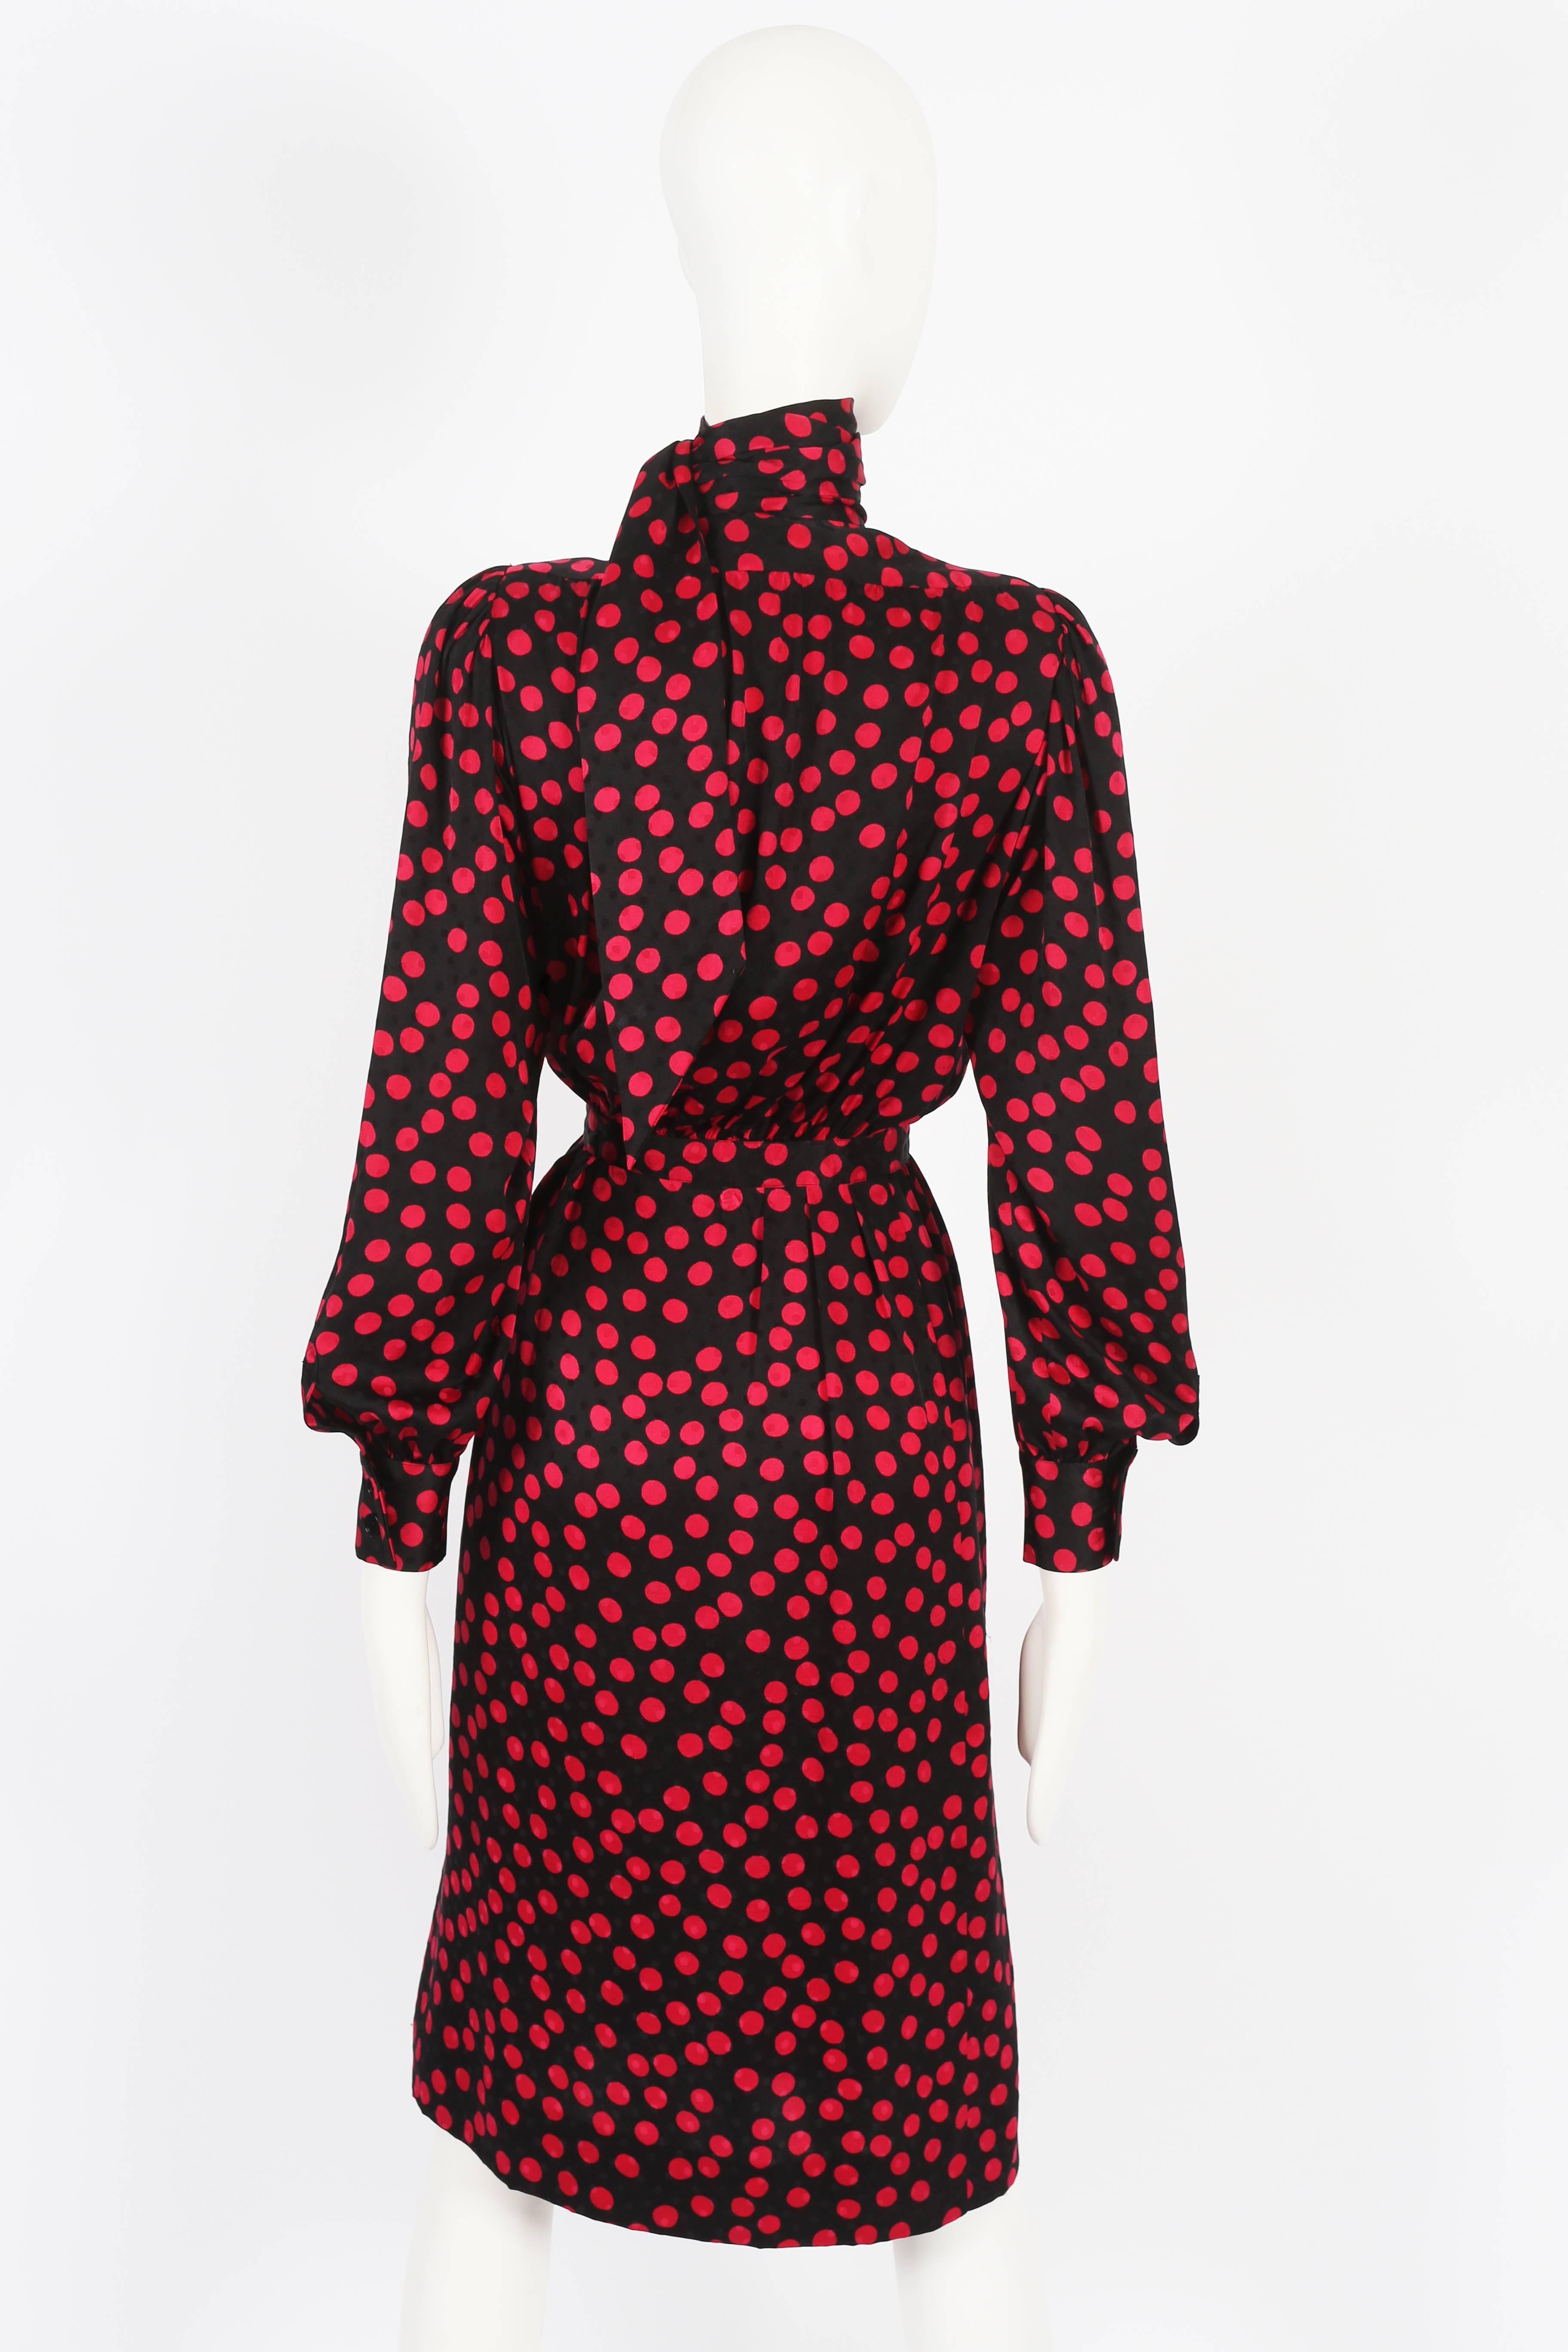 Yves Saint Laurent silk polka dot evening wrap dress, circa 1970s 3